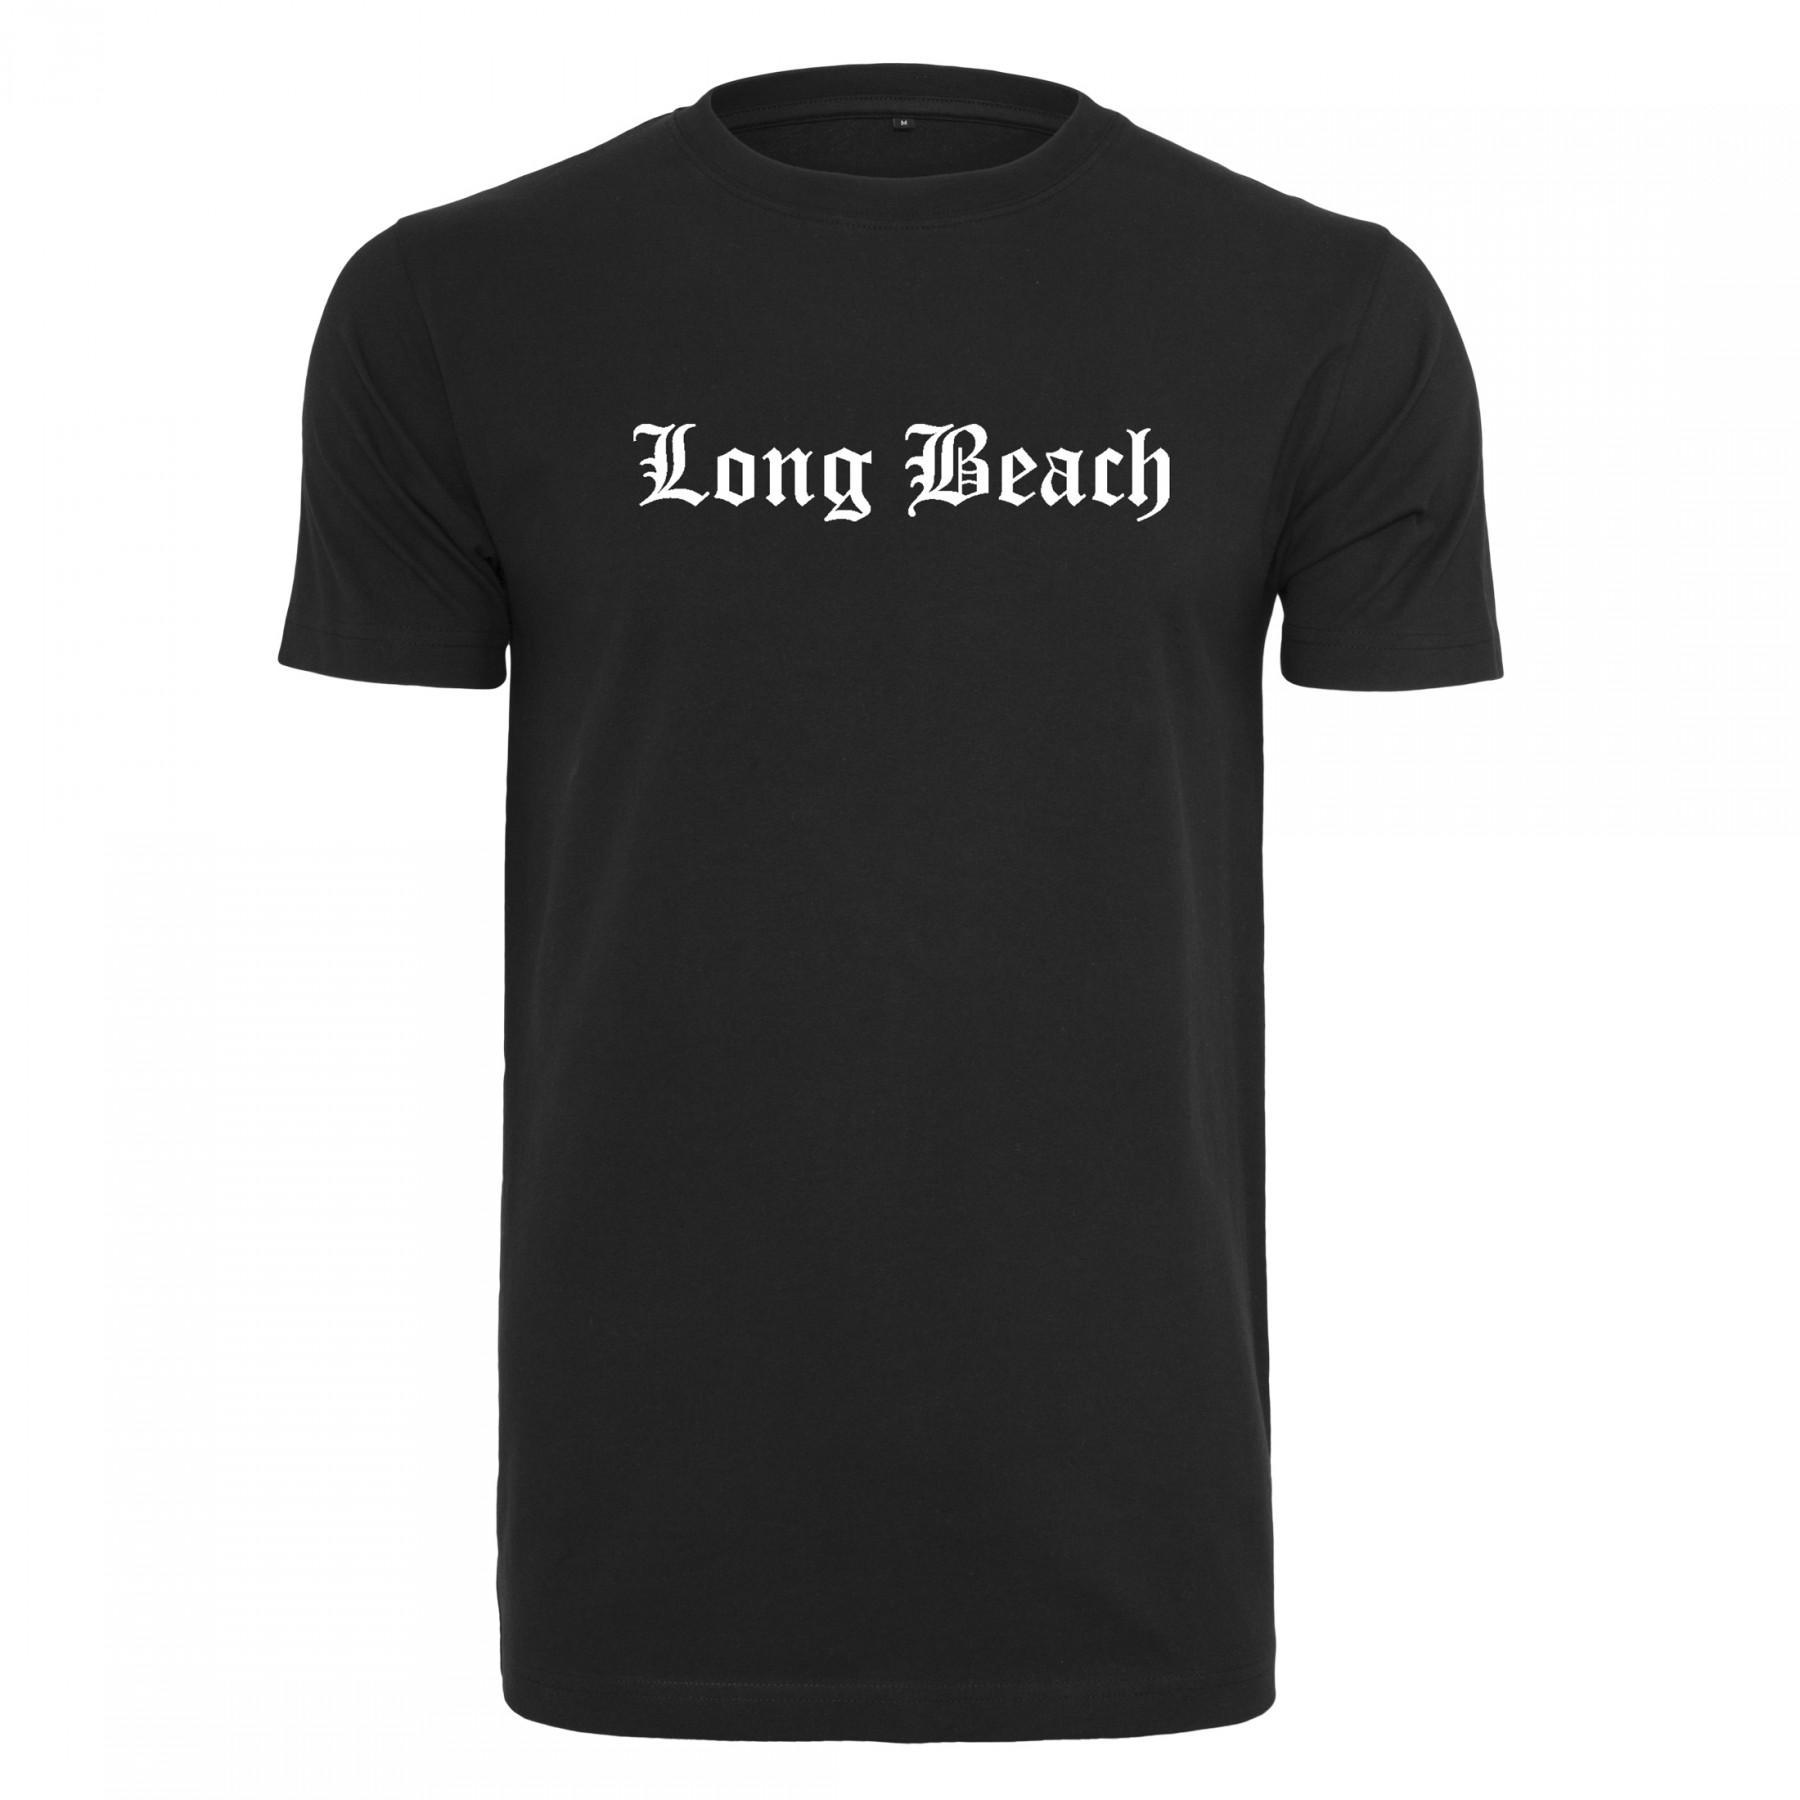 Koszulka Mister Tee long beach